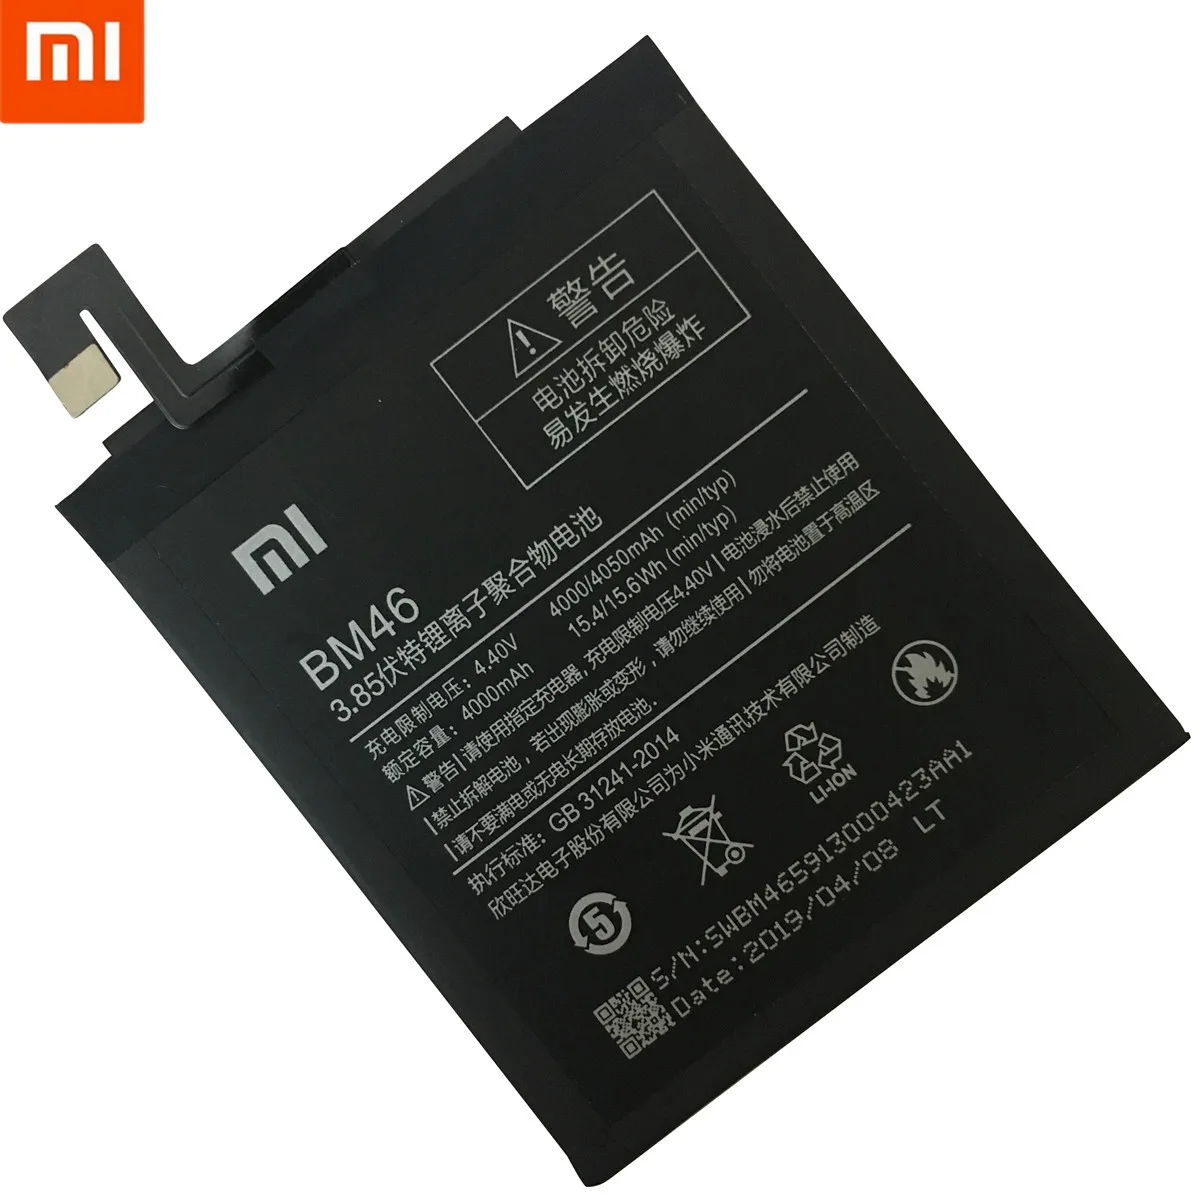 Аккумулятор Xiao mi для Xiao mi Red mi 3 3S 3X4X3 pro Note 3 5 5A 4A Pro mi 5X BM46 BM47 BN30 BN31 BN45 сменный аккумулятор